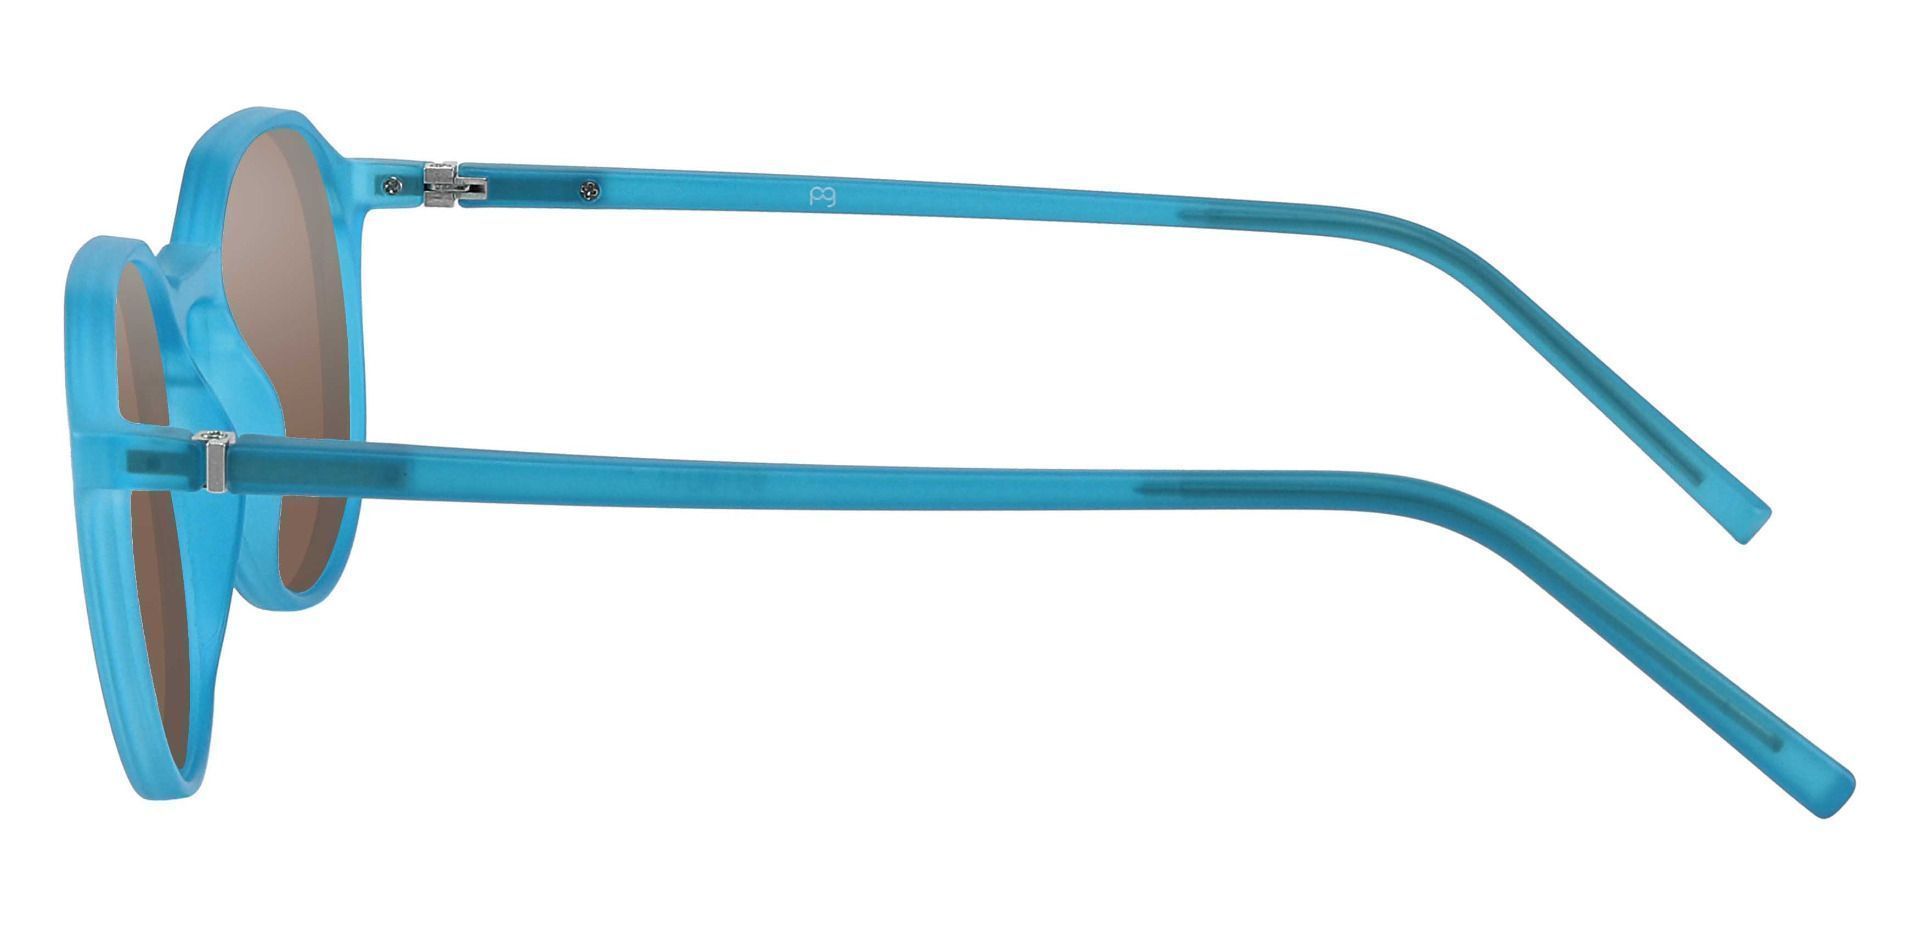 Belvidere Geometric Reading Sunglasses - Blue Frame With Brown Lenses